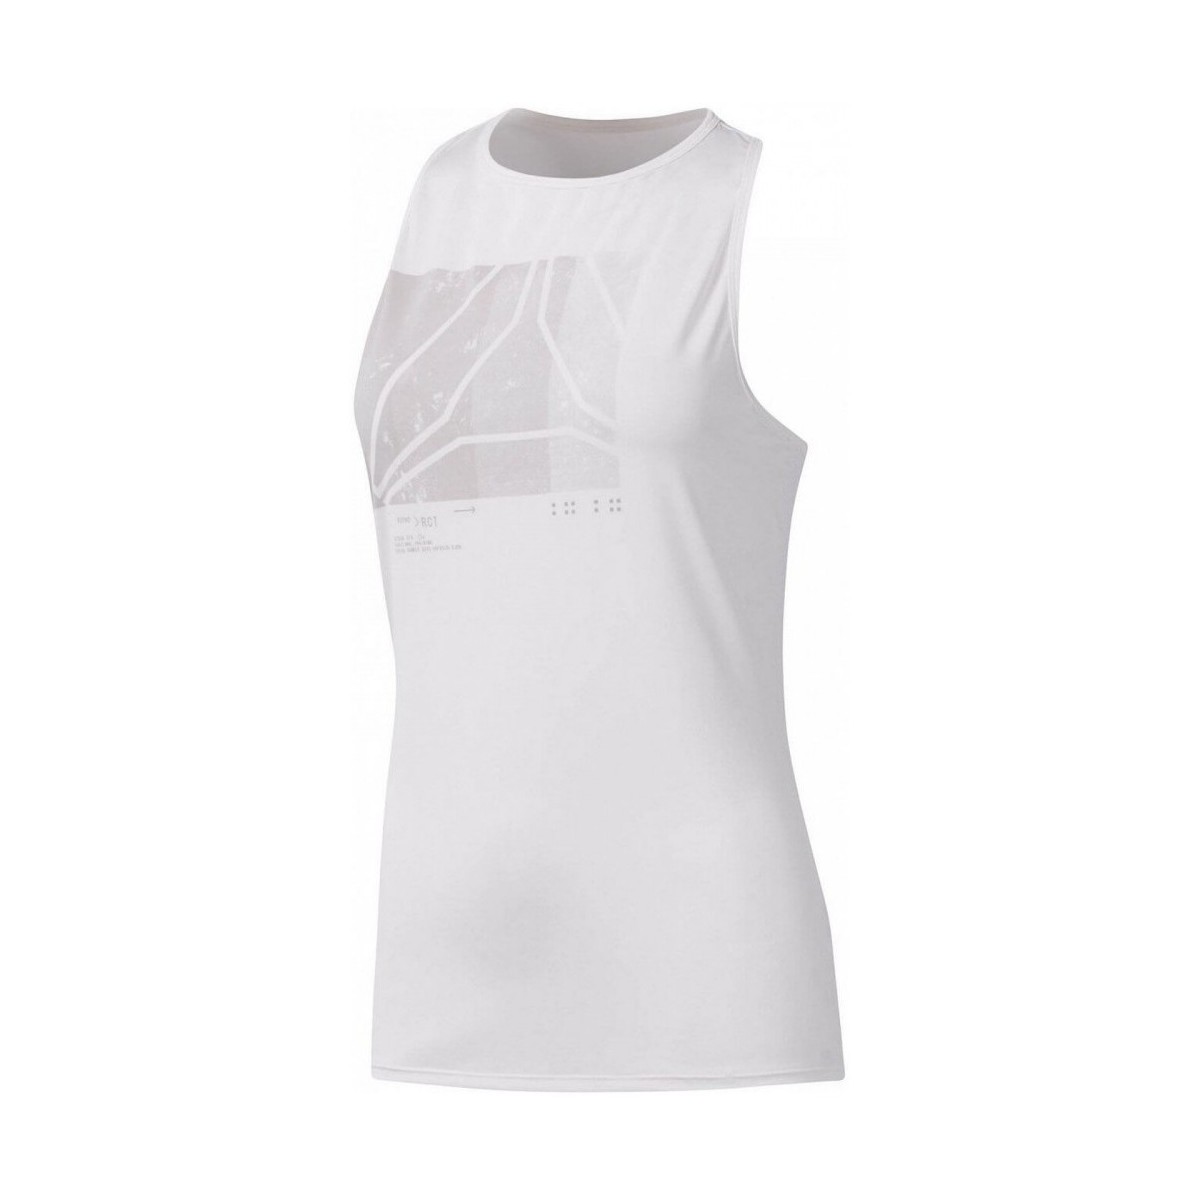 Vêtements Femme Débardeurs / T-shirts sans manche Reebok Sport Os Ac Graphic Tank Blanc